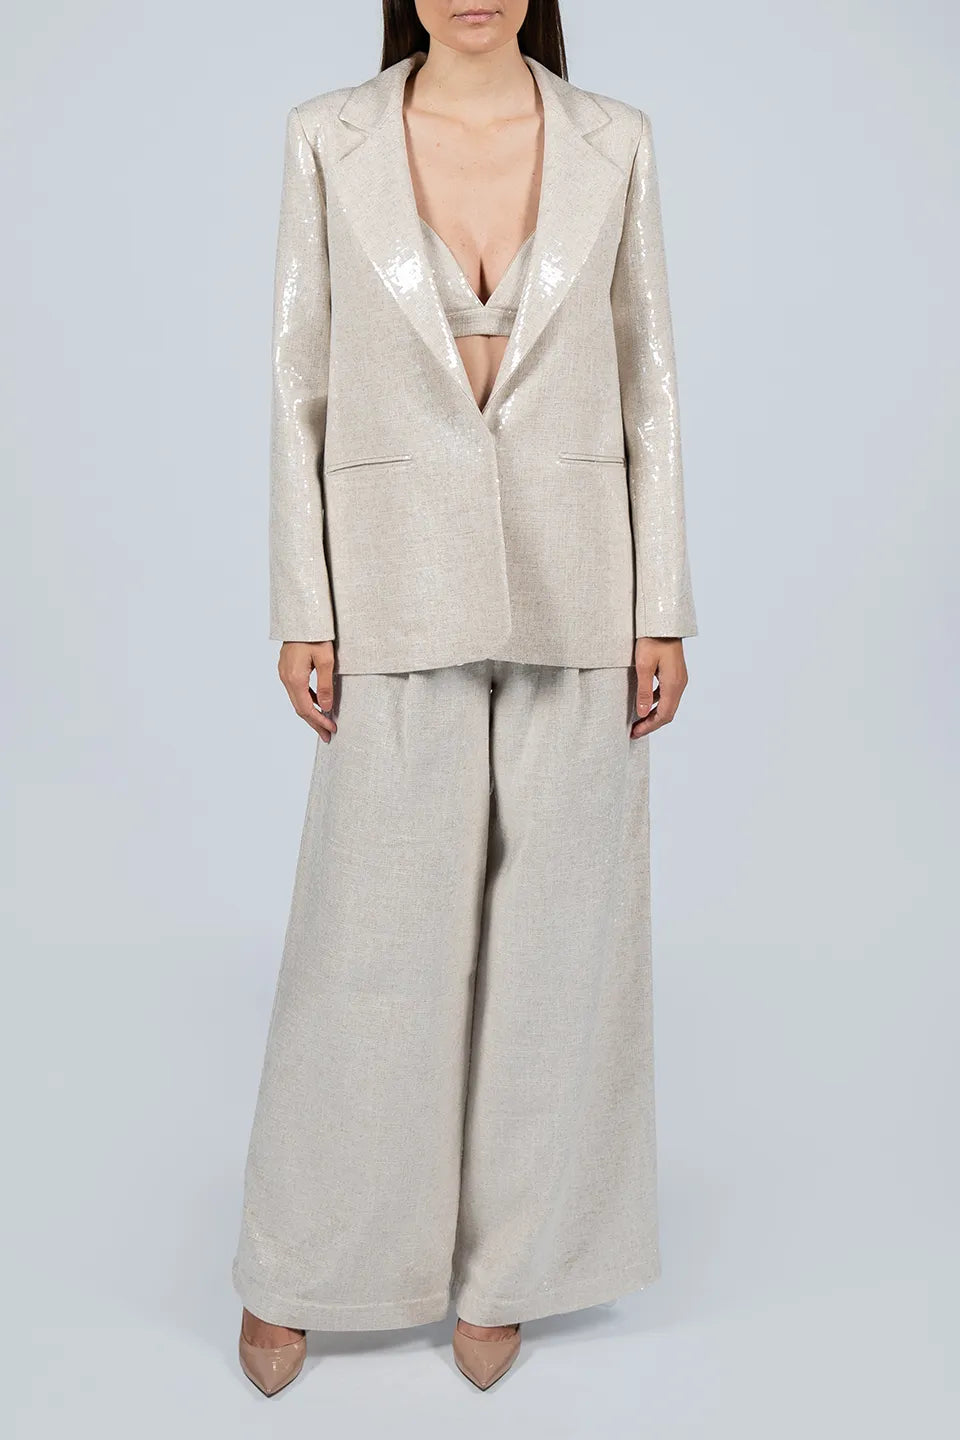 Designer Beige Women blazers, Jacket, shop online with free delivery in UAE. Product gallery 2